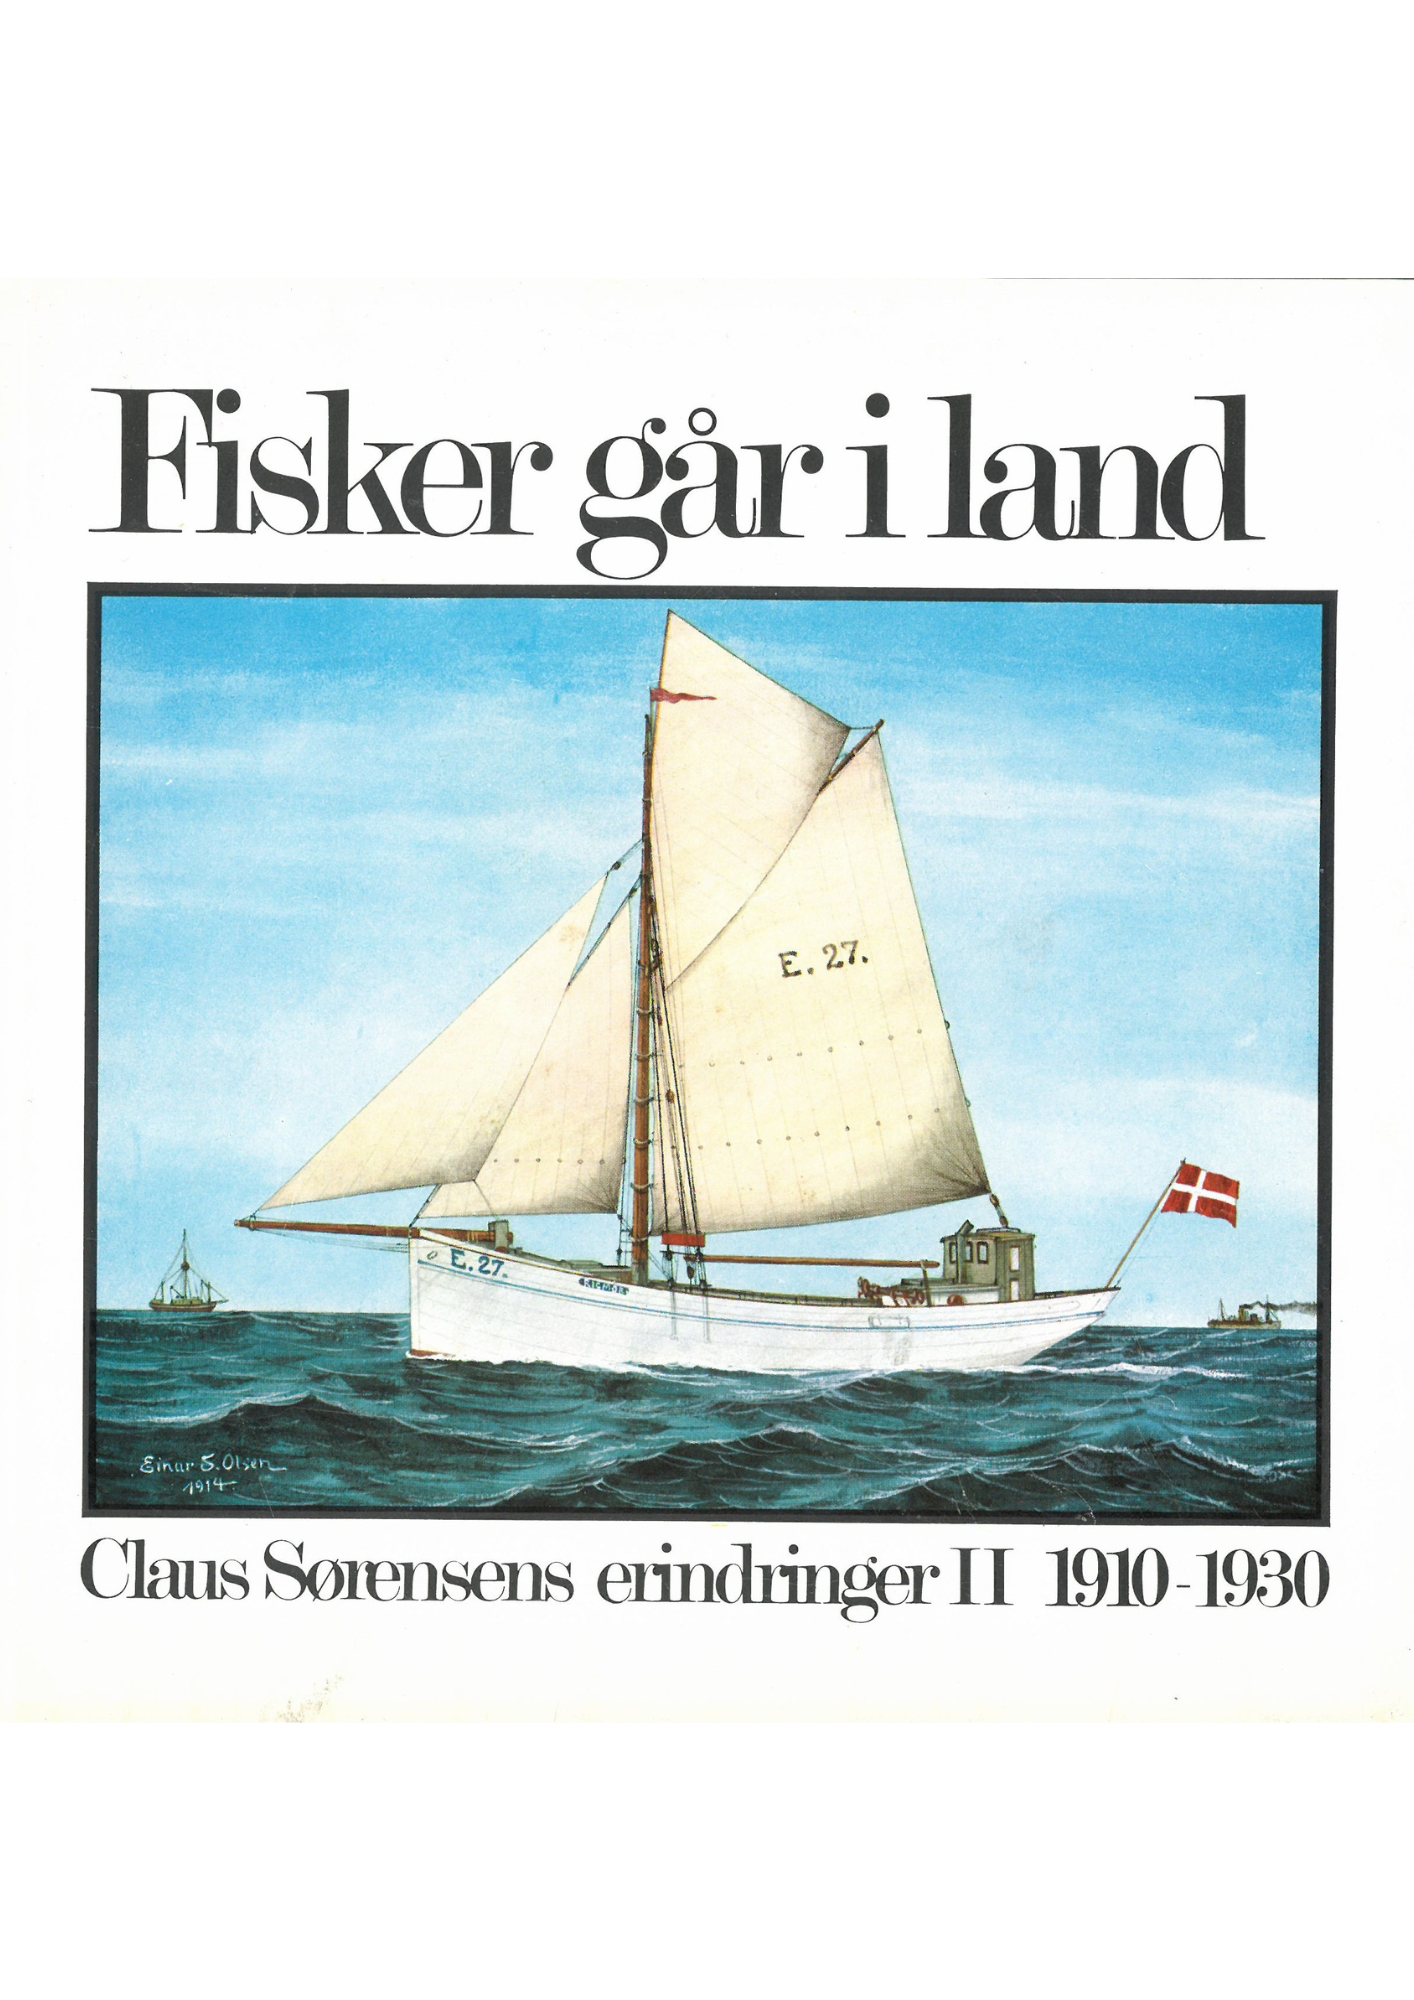 Claus Sørensens erindringer II 1910-1930: Fisker går i land